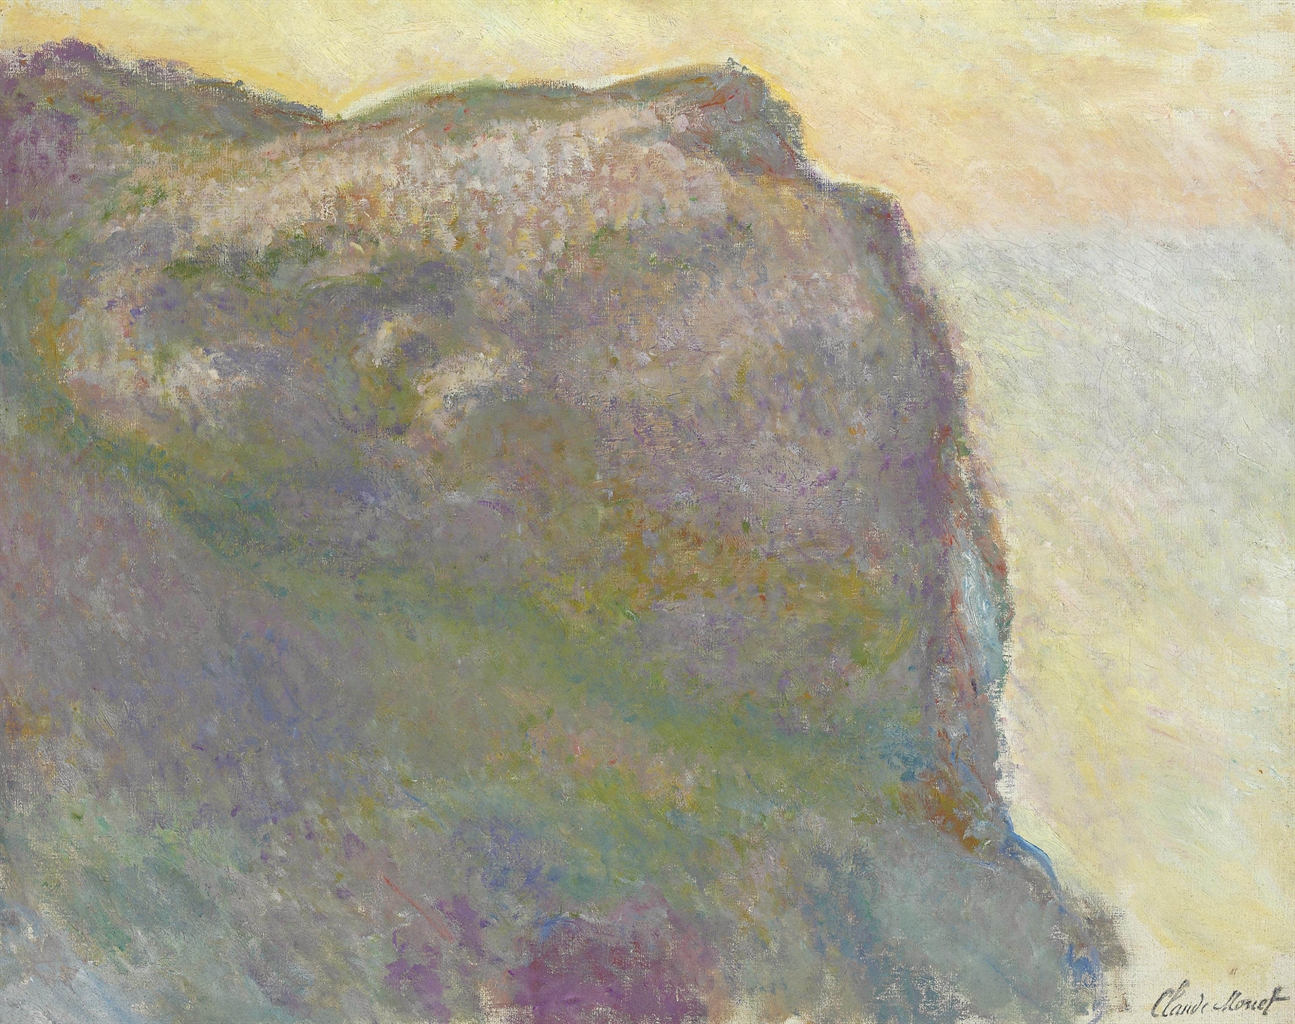 Claude+Monet-1840-1926 (716).jpg